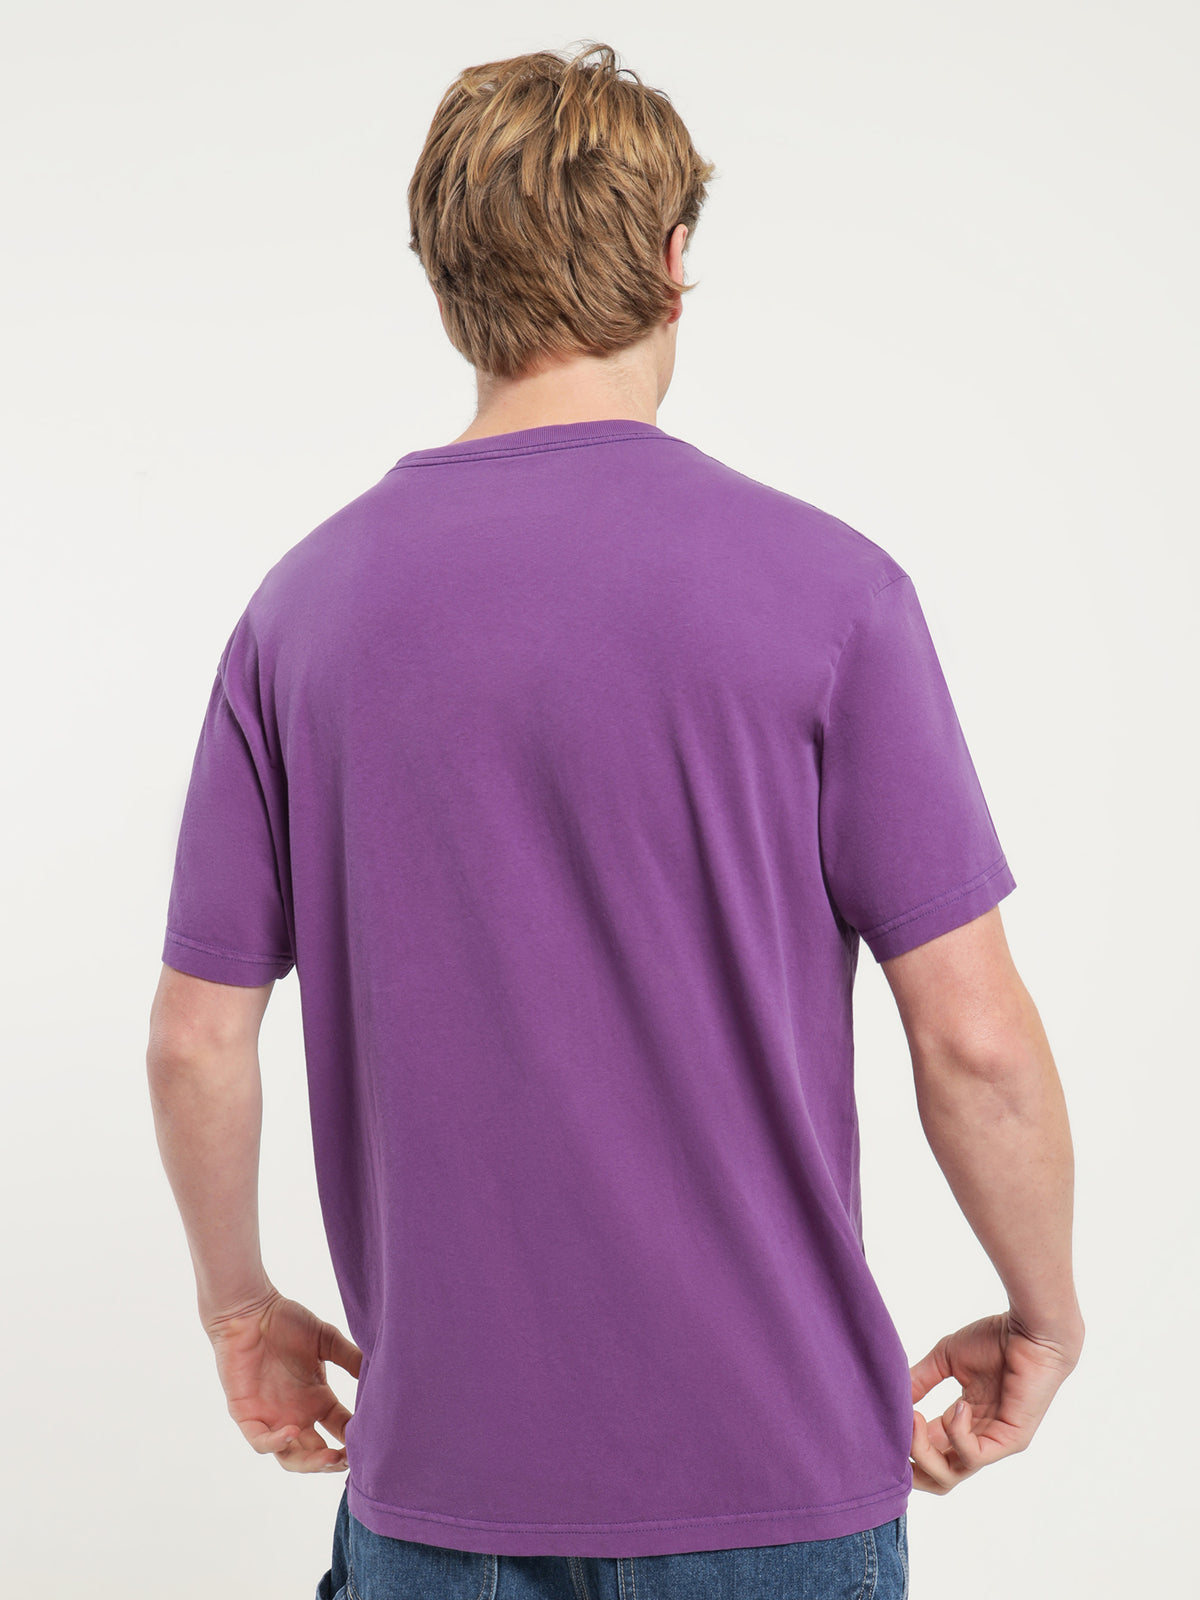 Suns 93 Finals T-Shirt in Purple